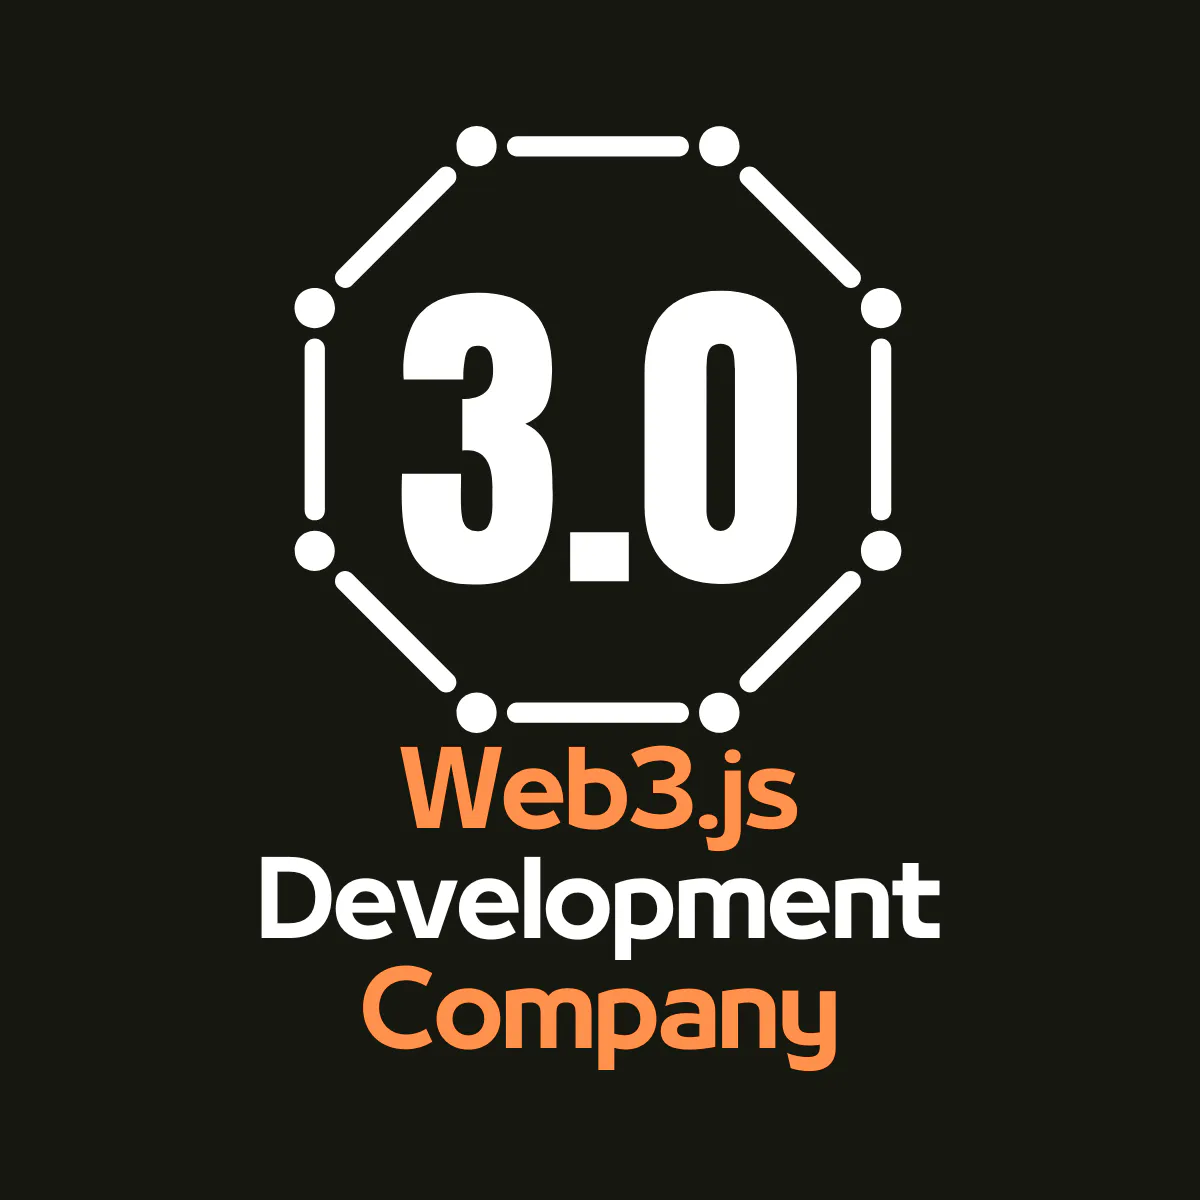 Web3.js Development